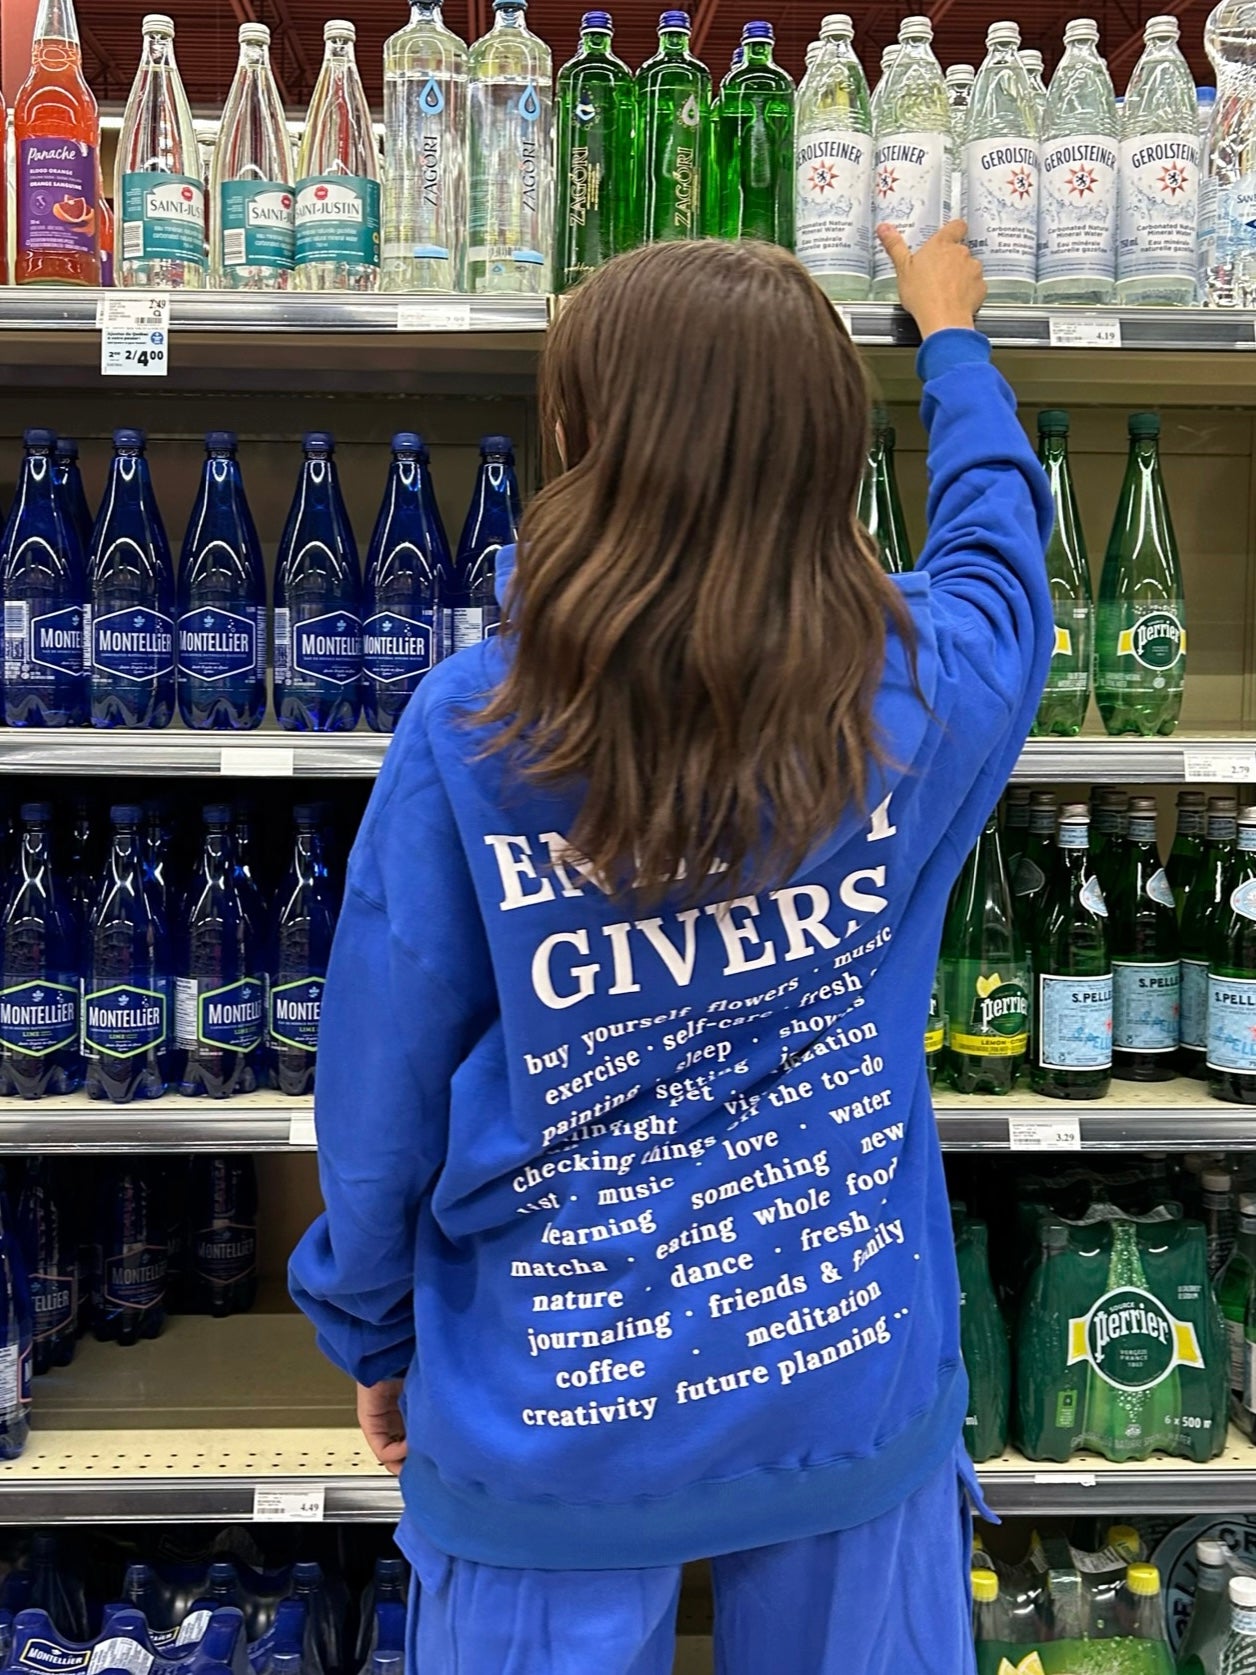 Energy givers hoodie bleu